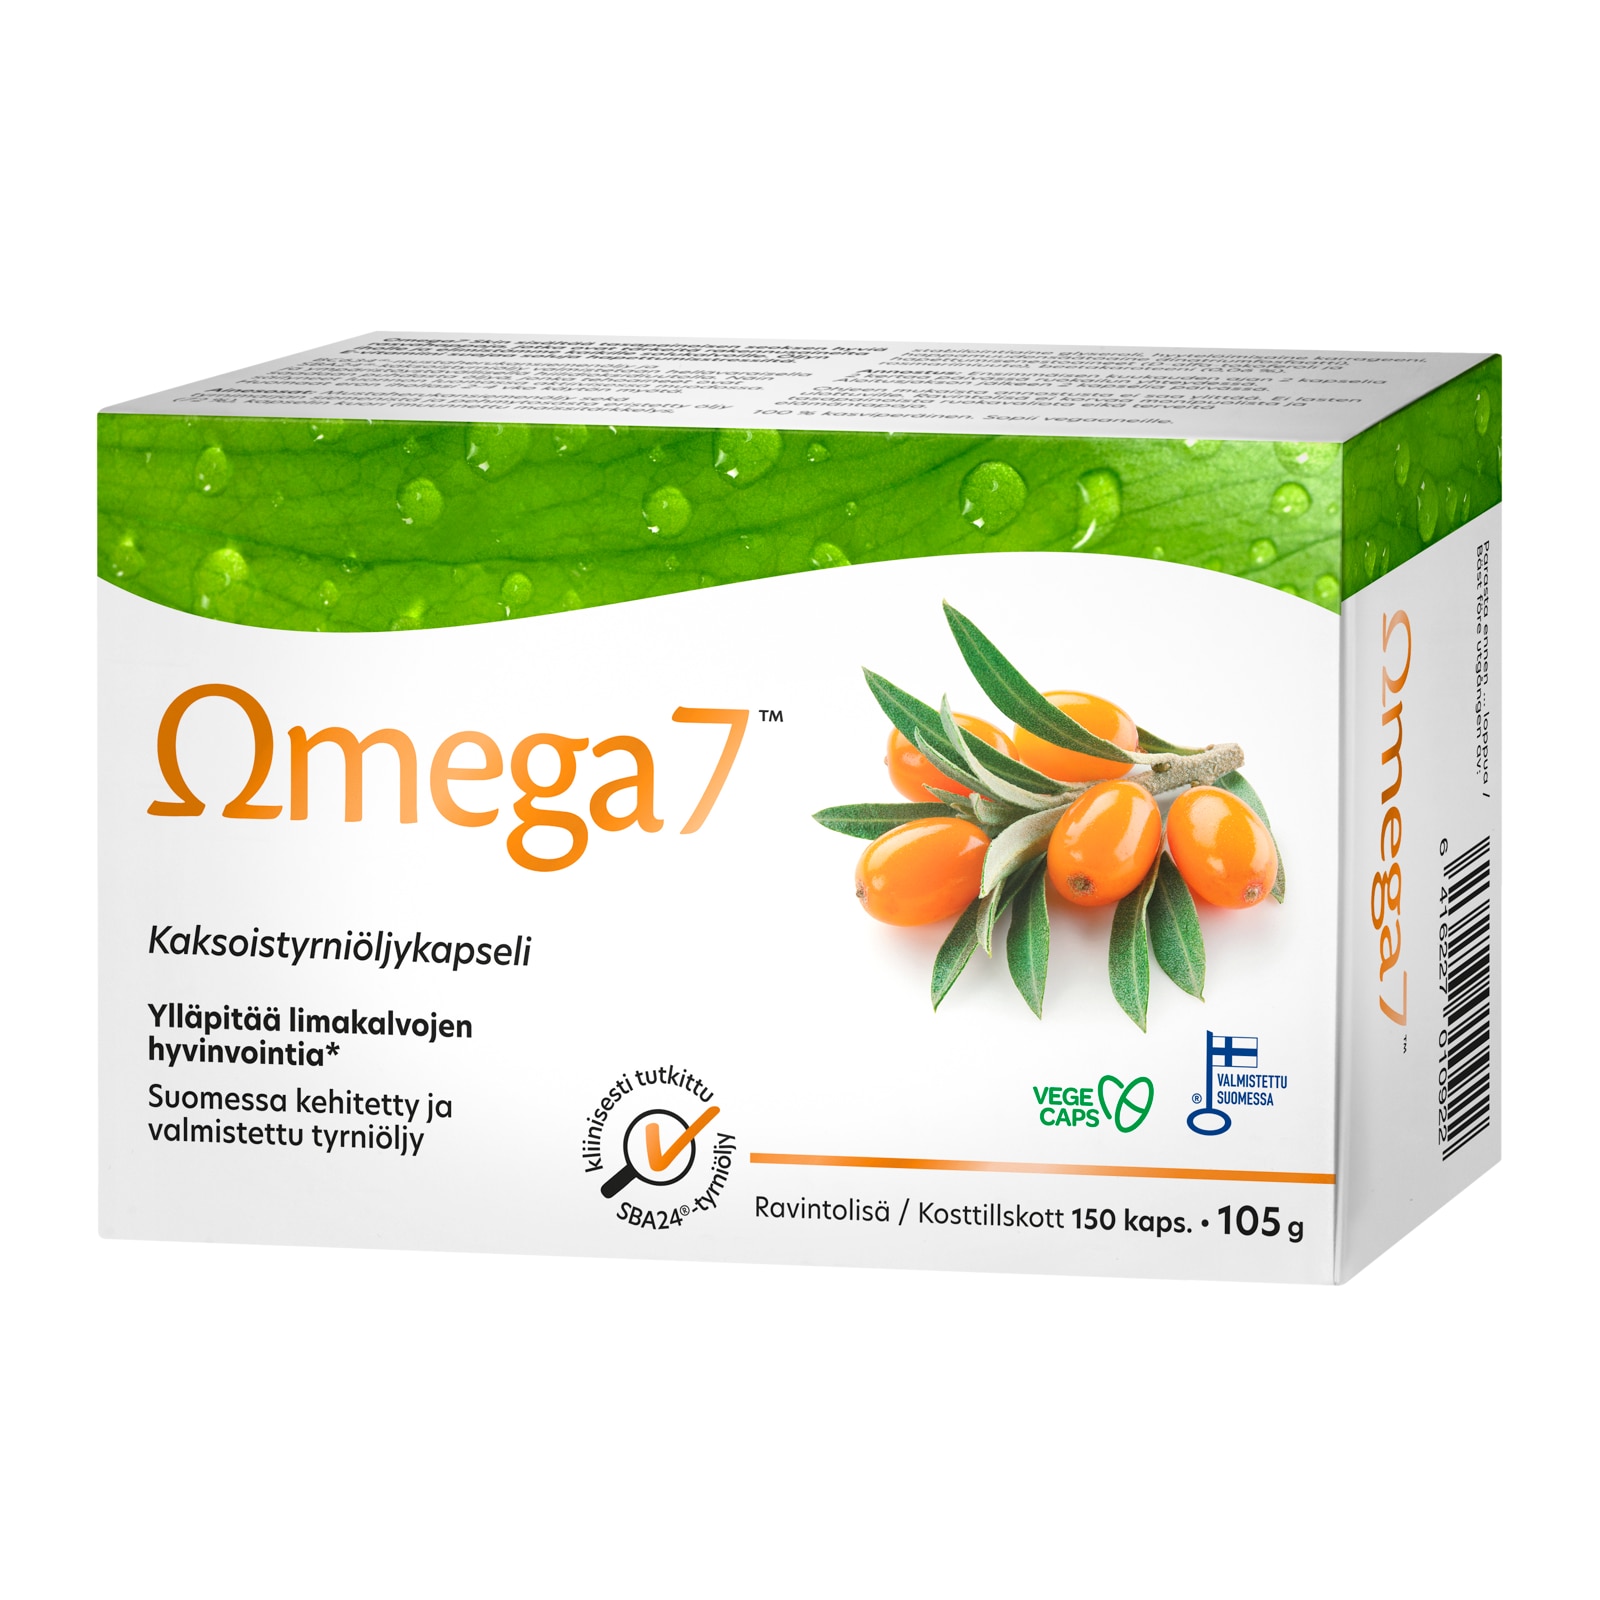 Omega 7 kaksoistyrniöljy